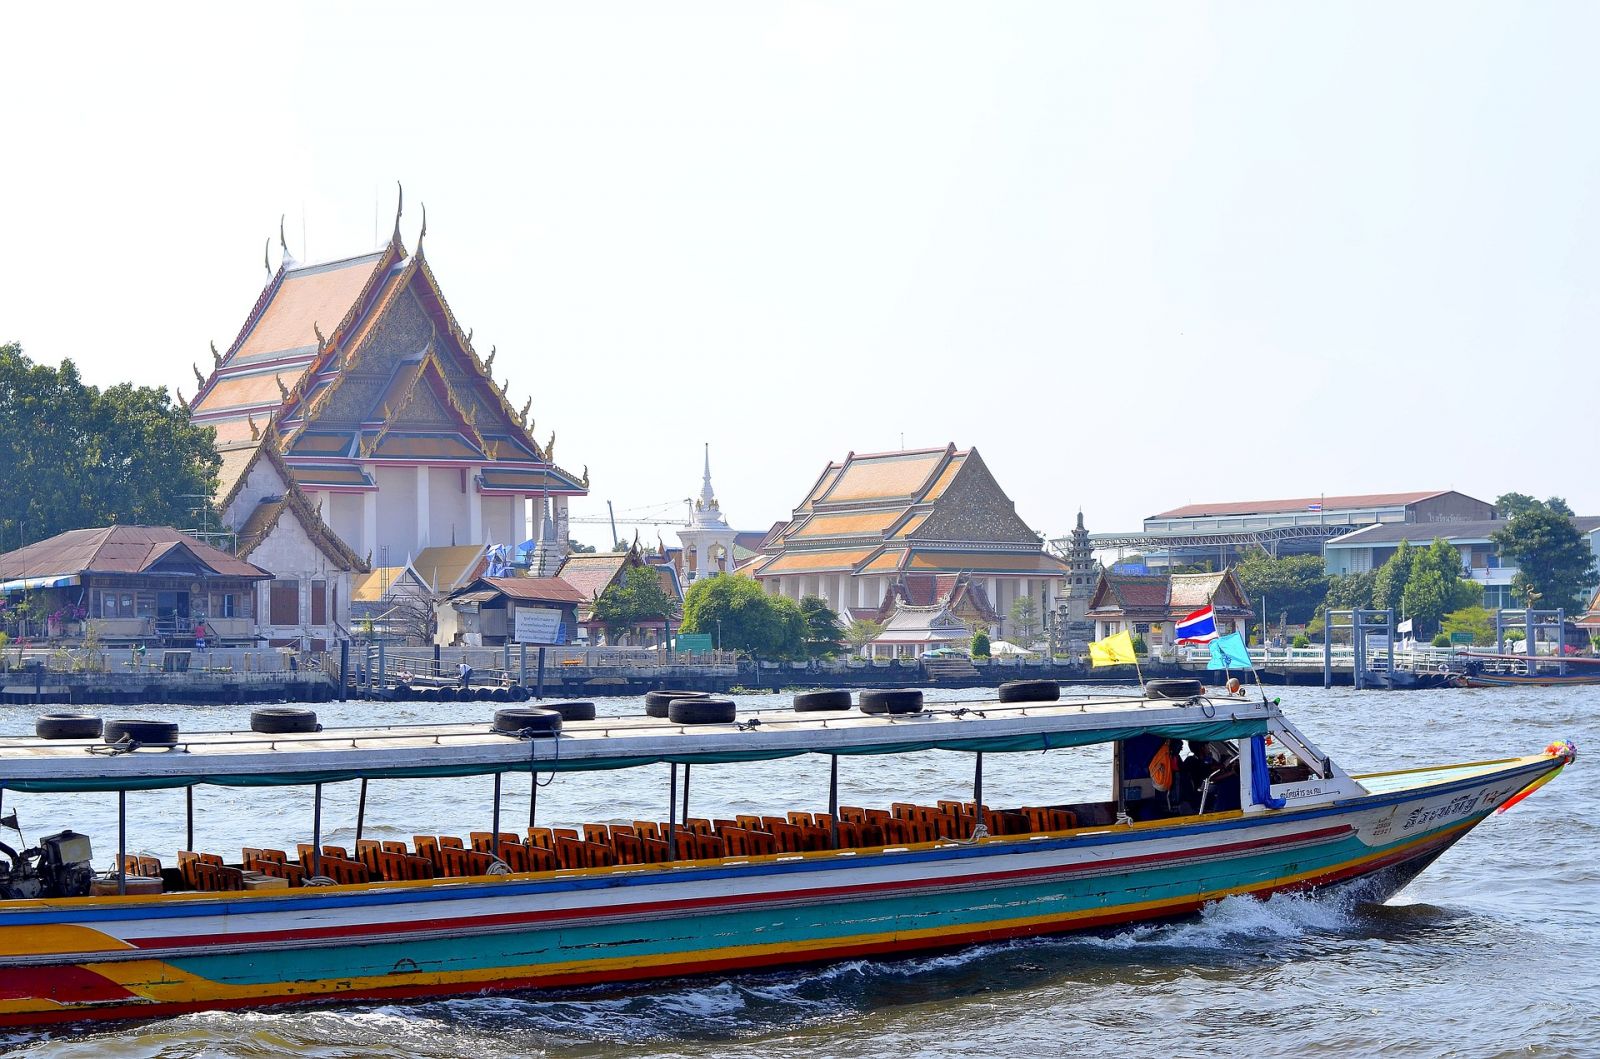 Лодки в Тайланде. Река в Бангкоке. Экскурсия по каналам Бангкока. Затопленная лодка Тайланд.